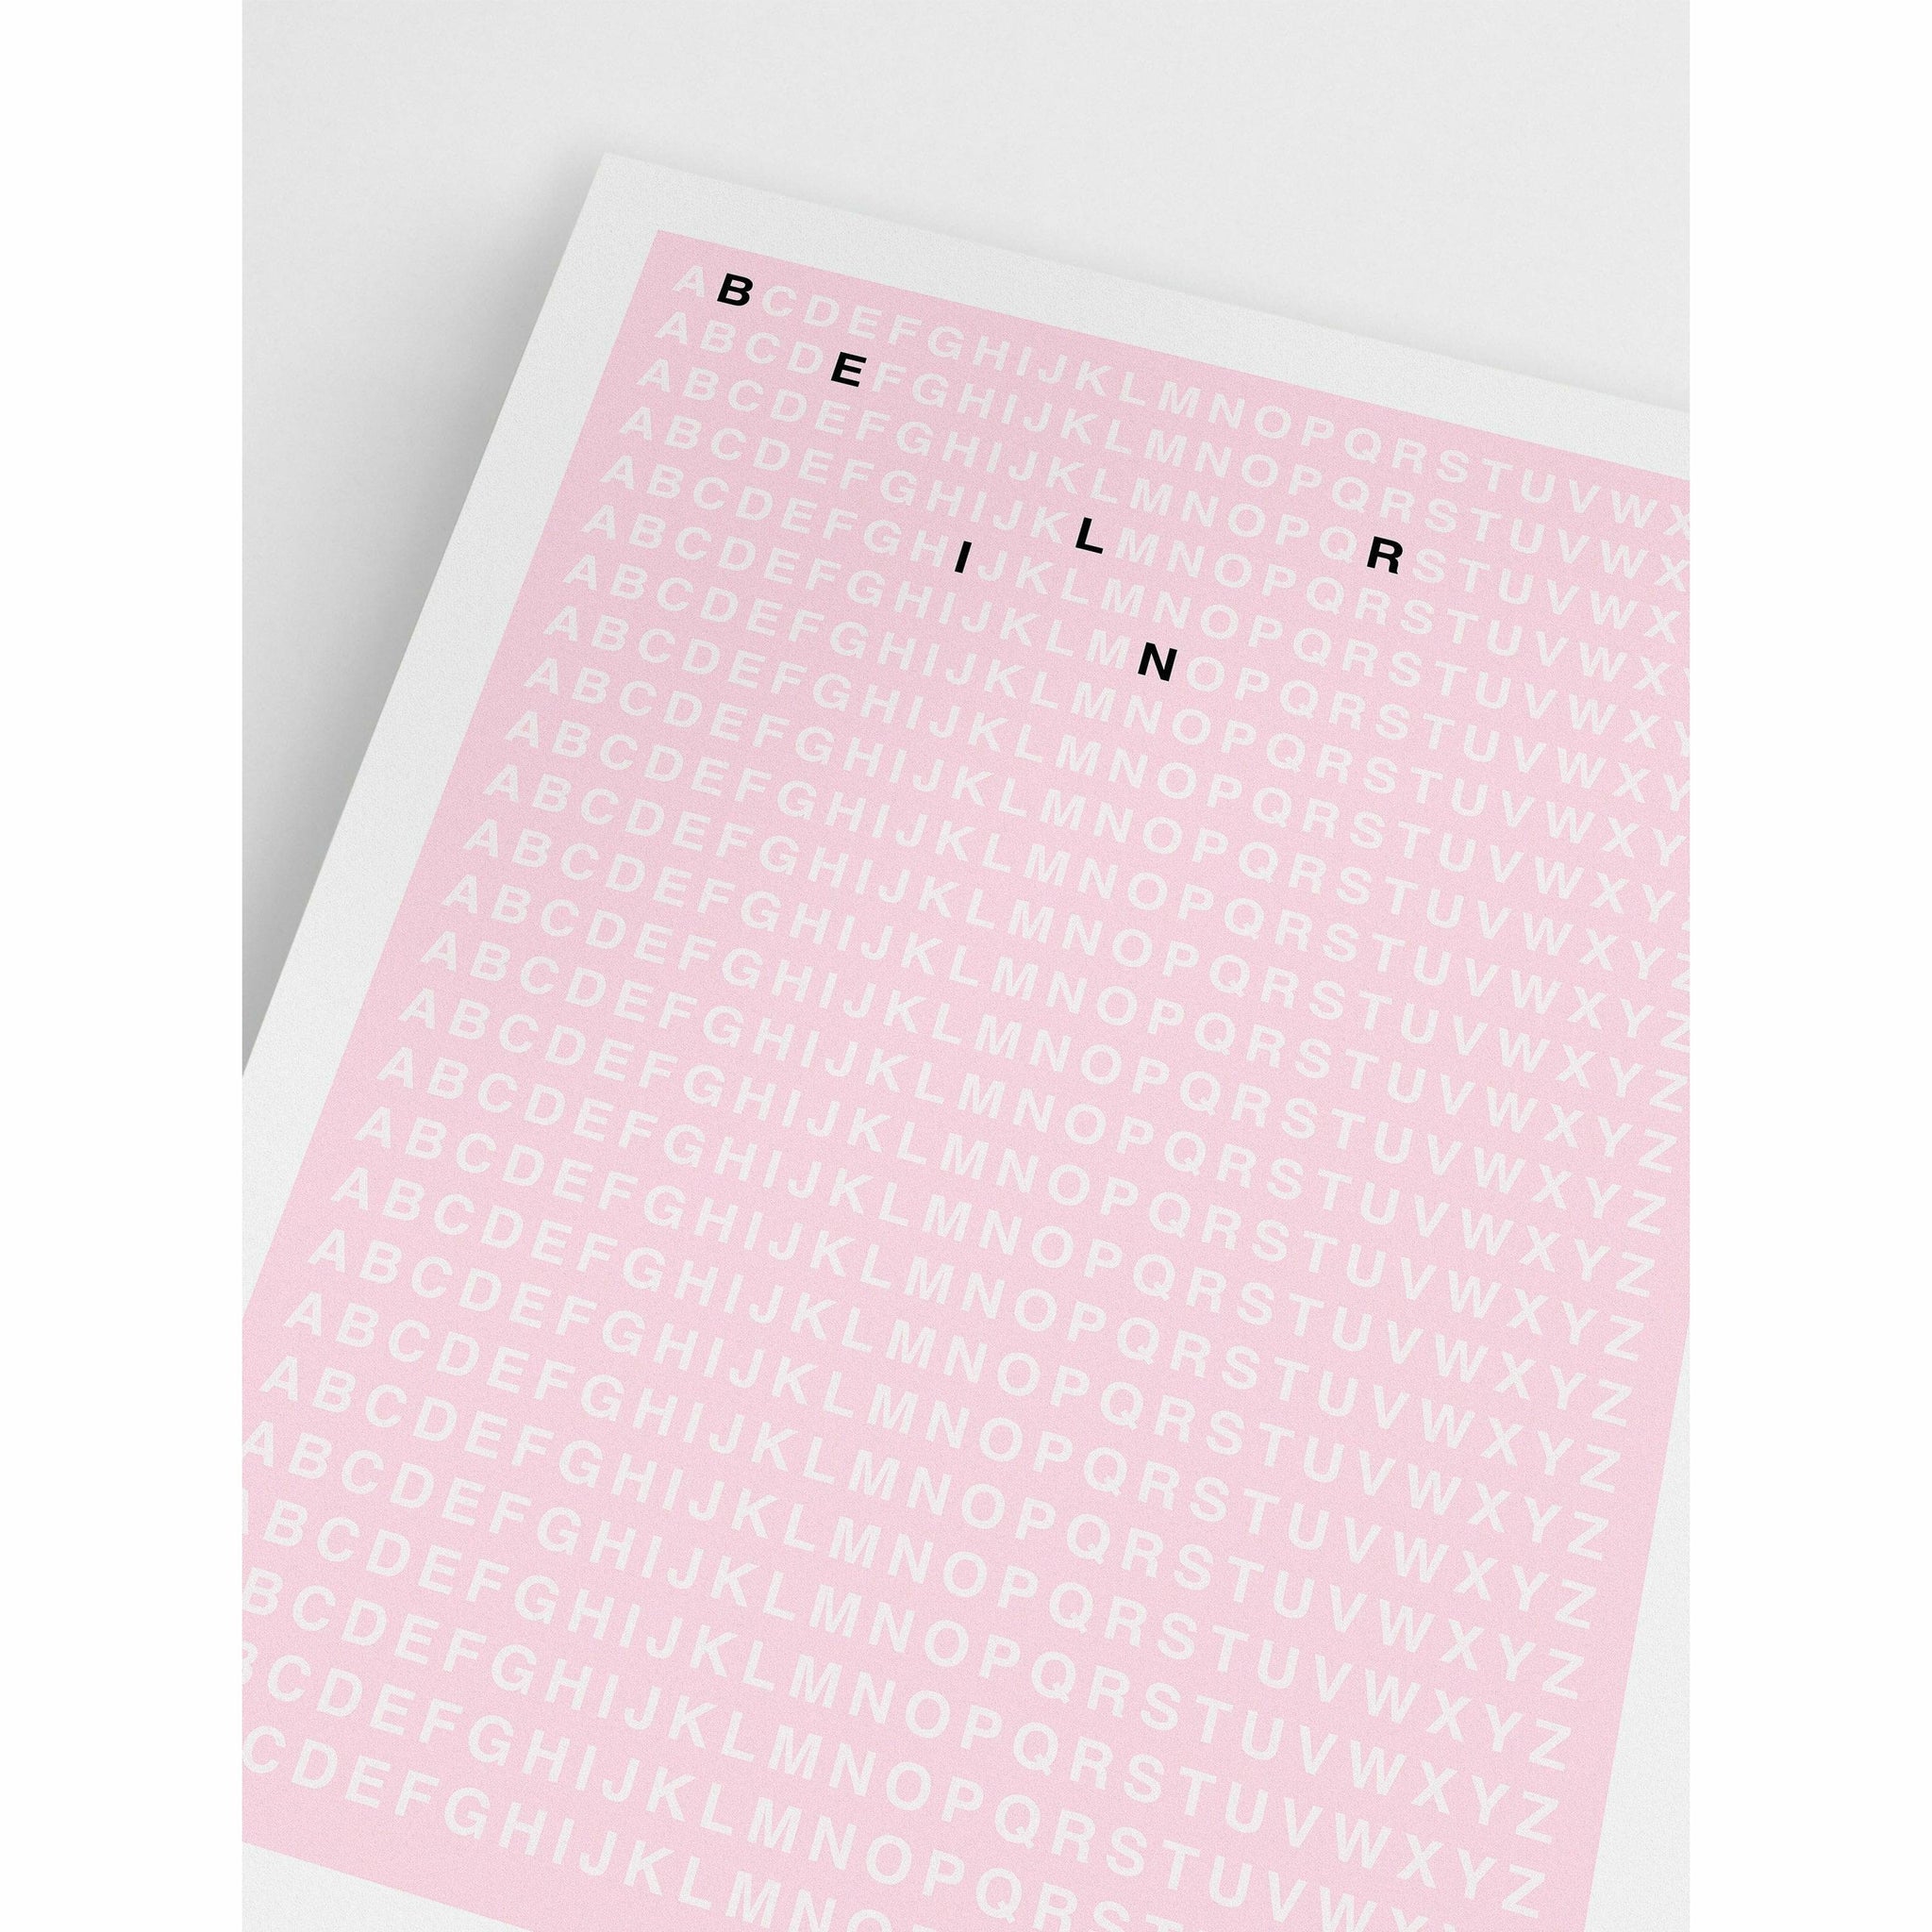 Berlin Pink Poster